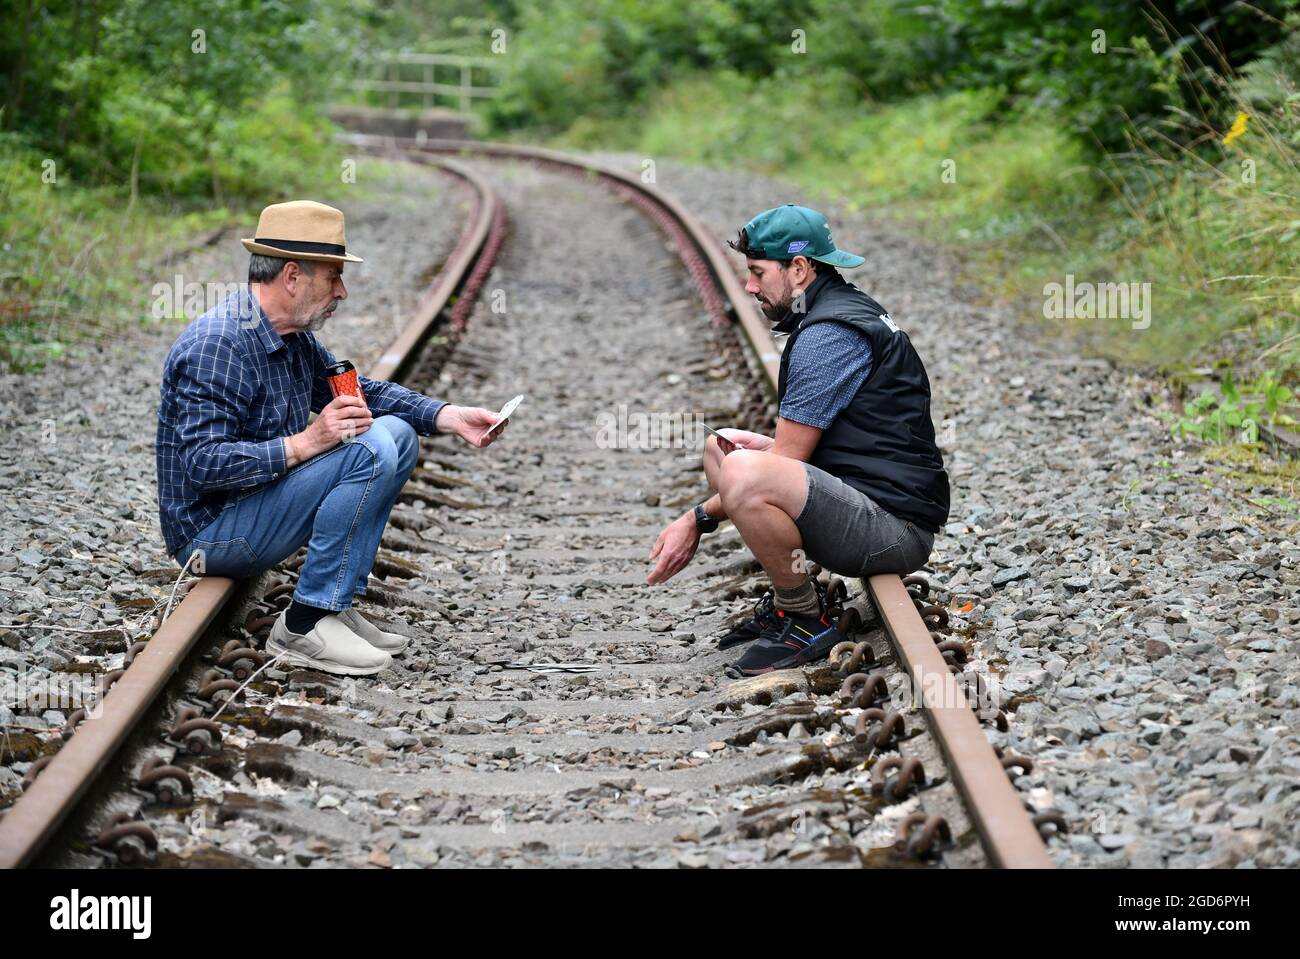 Two men playing cards on railway track Britain, Uk gamble gambling Stock Photo